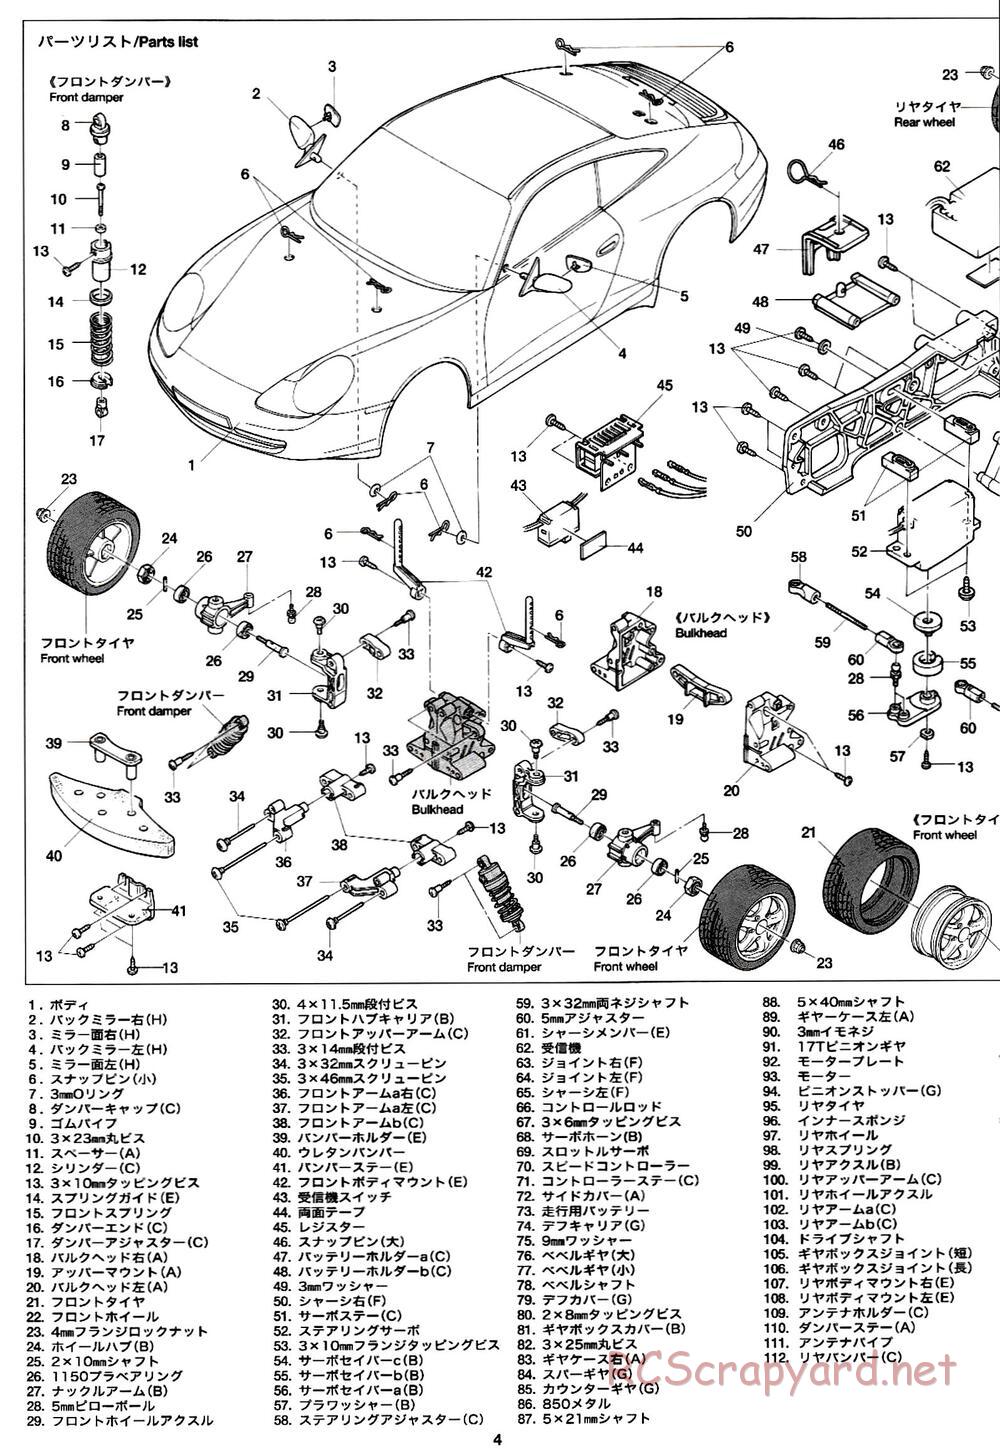 Tamiya - Porsche 911 Carrera - M-04L - Manual - Page 4